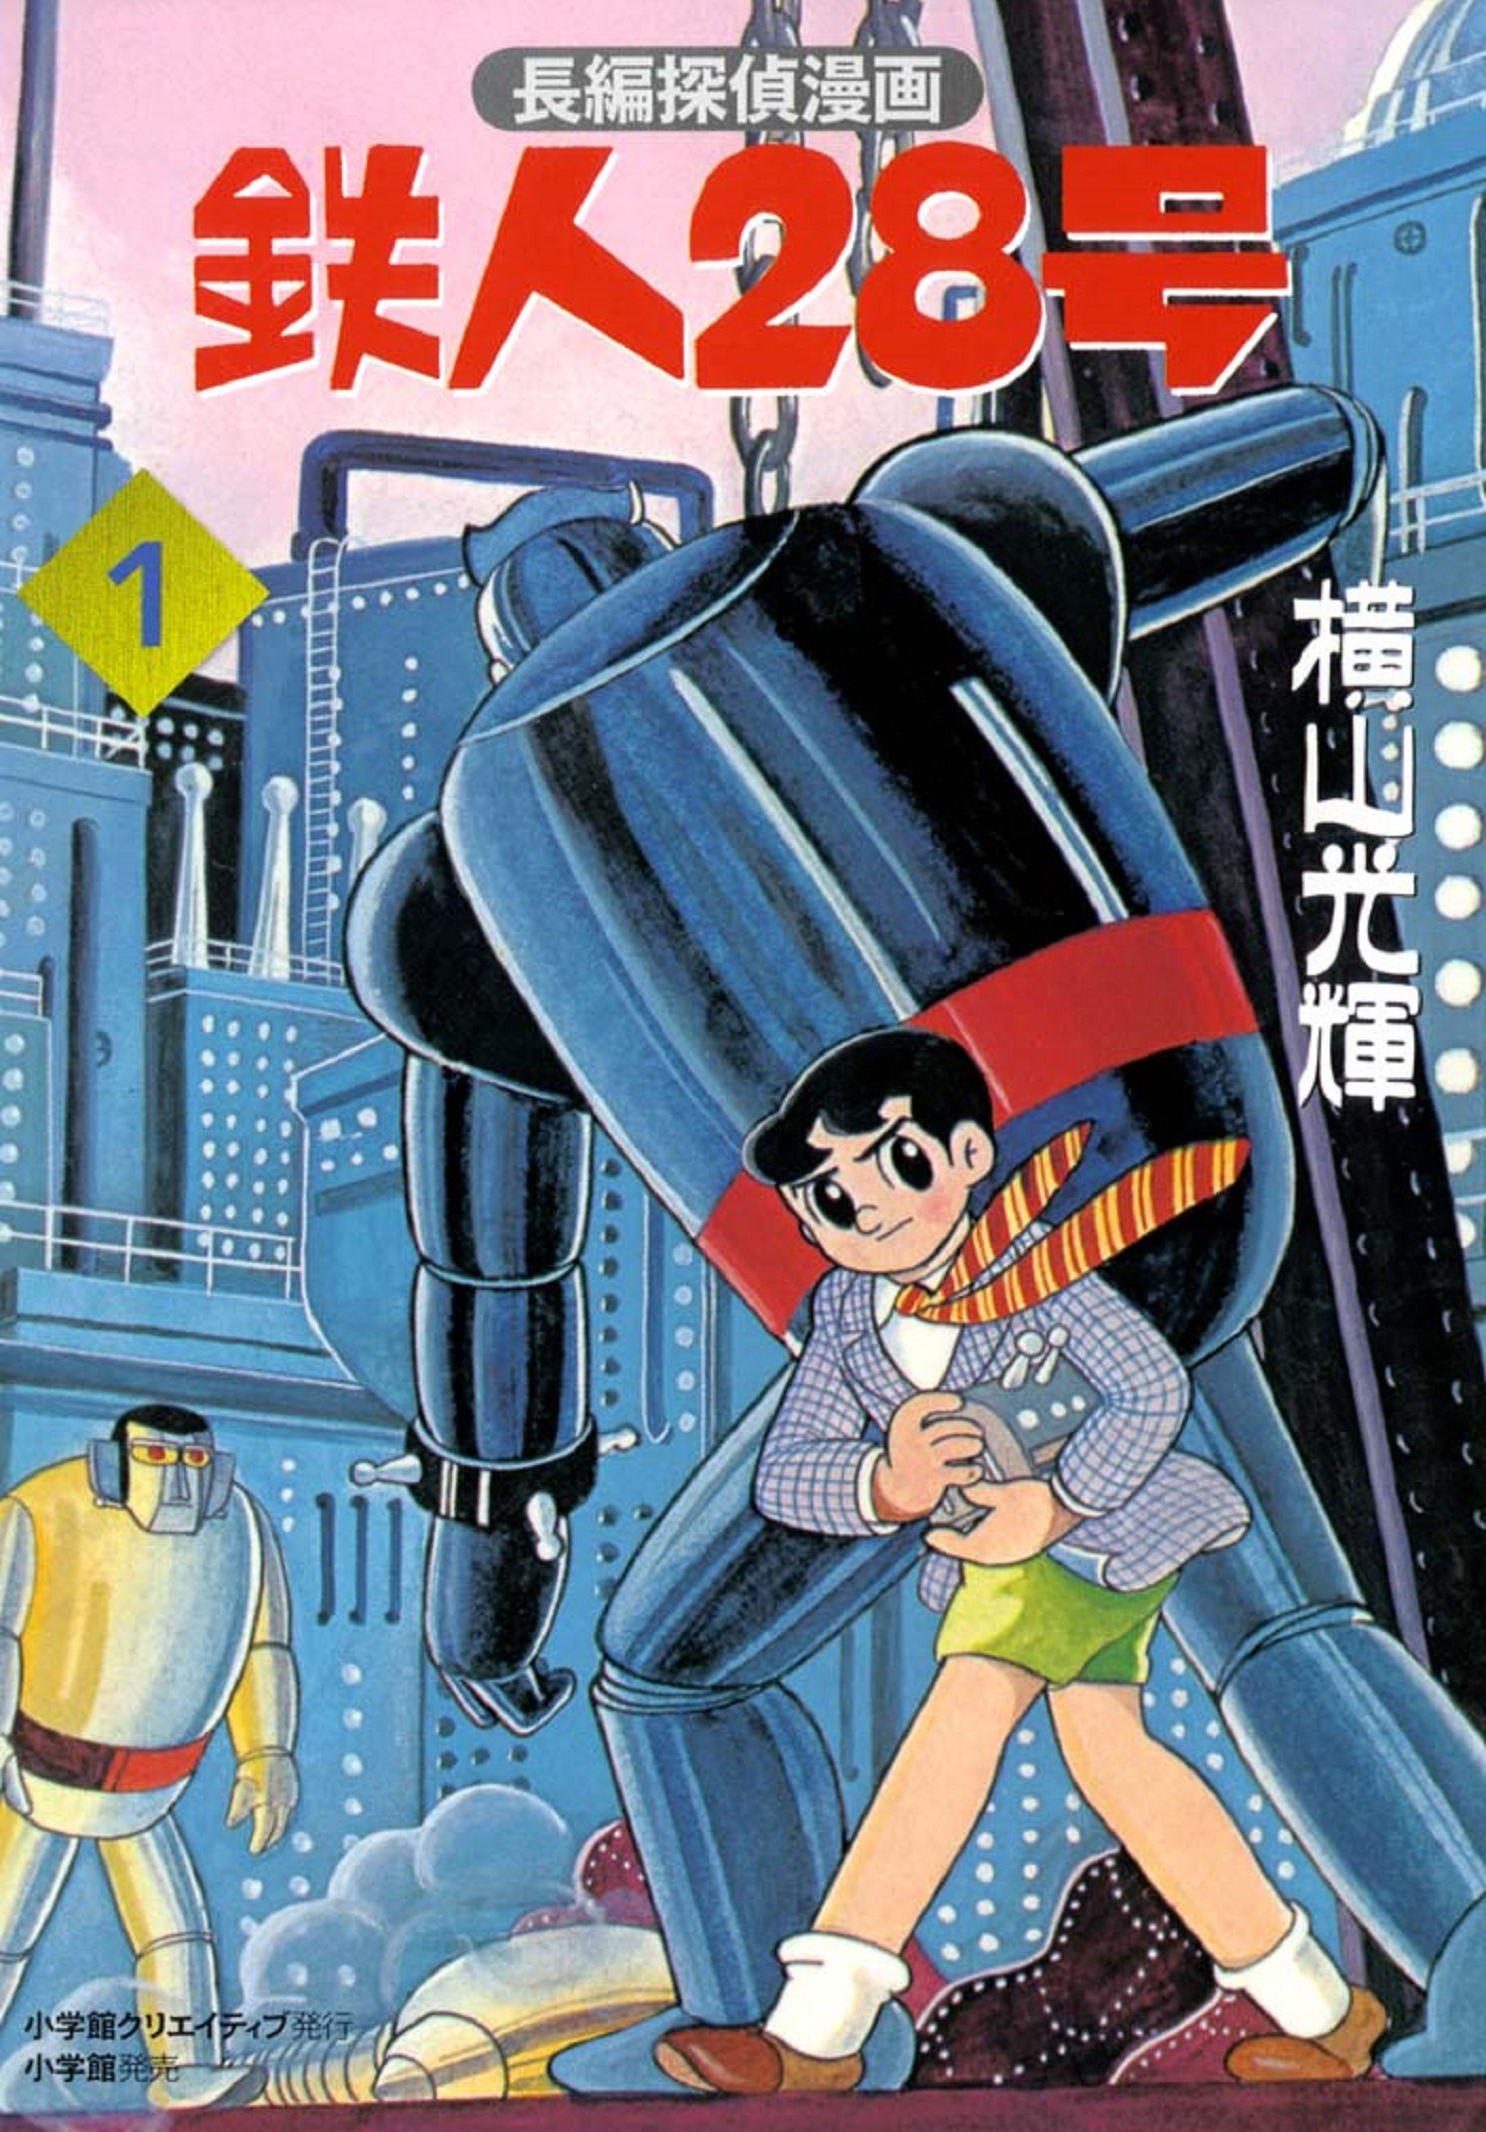 Tetsujin No. 28 Full Length Detective Manga thumbnail